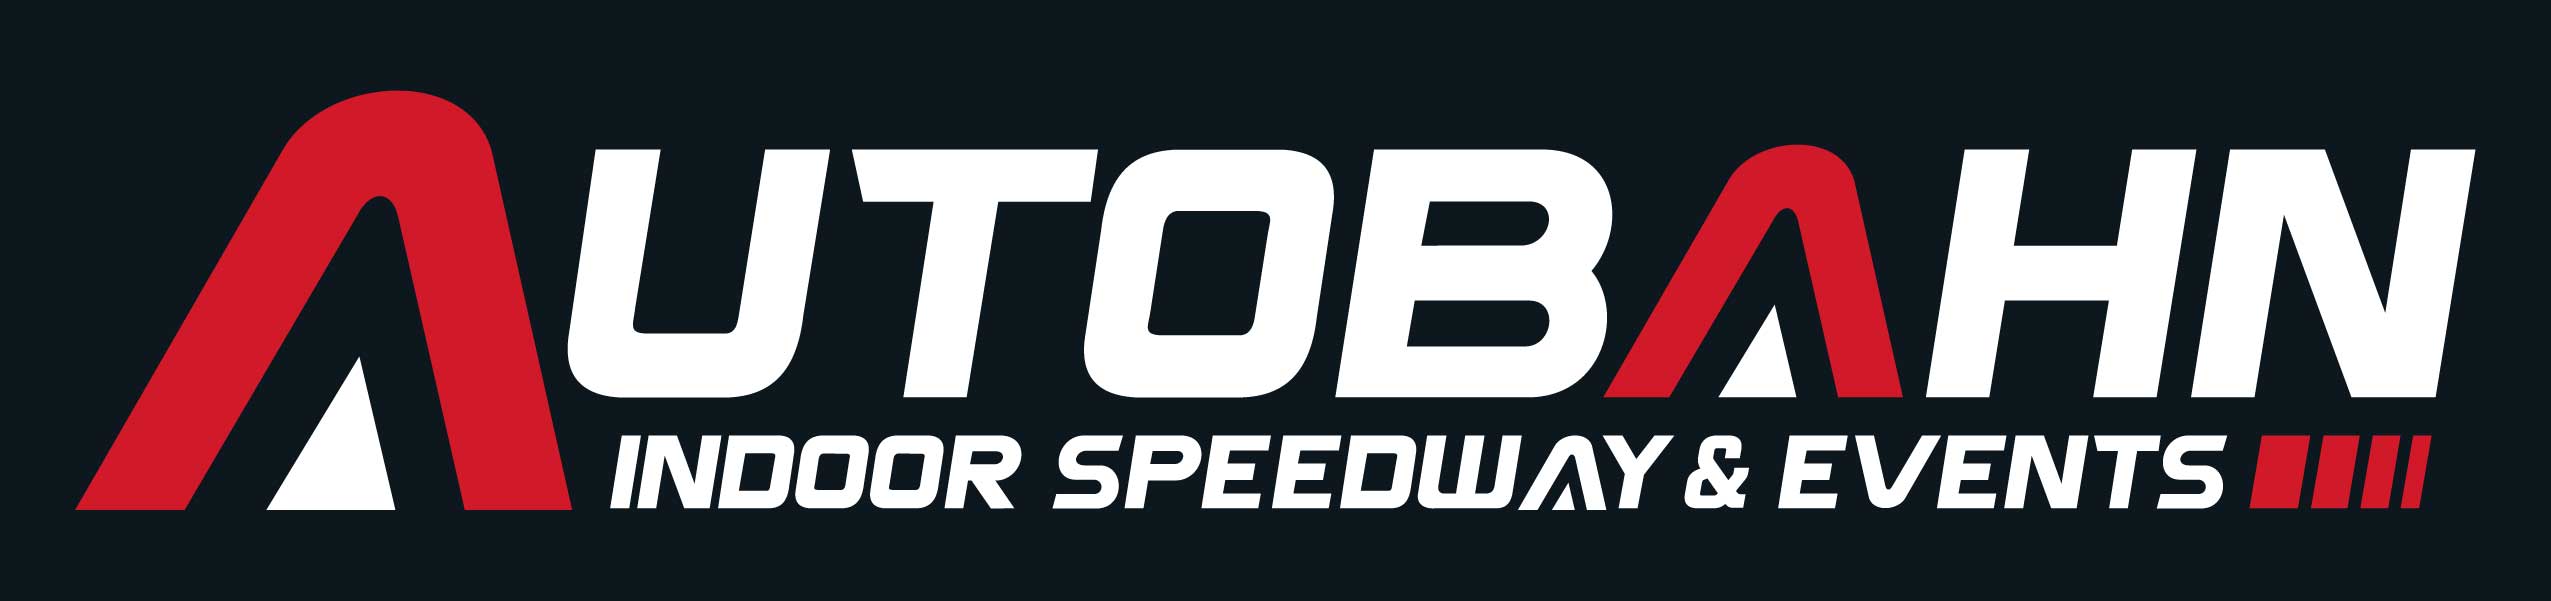 Autobahn Indoor Speedway & Events - Logo